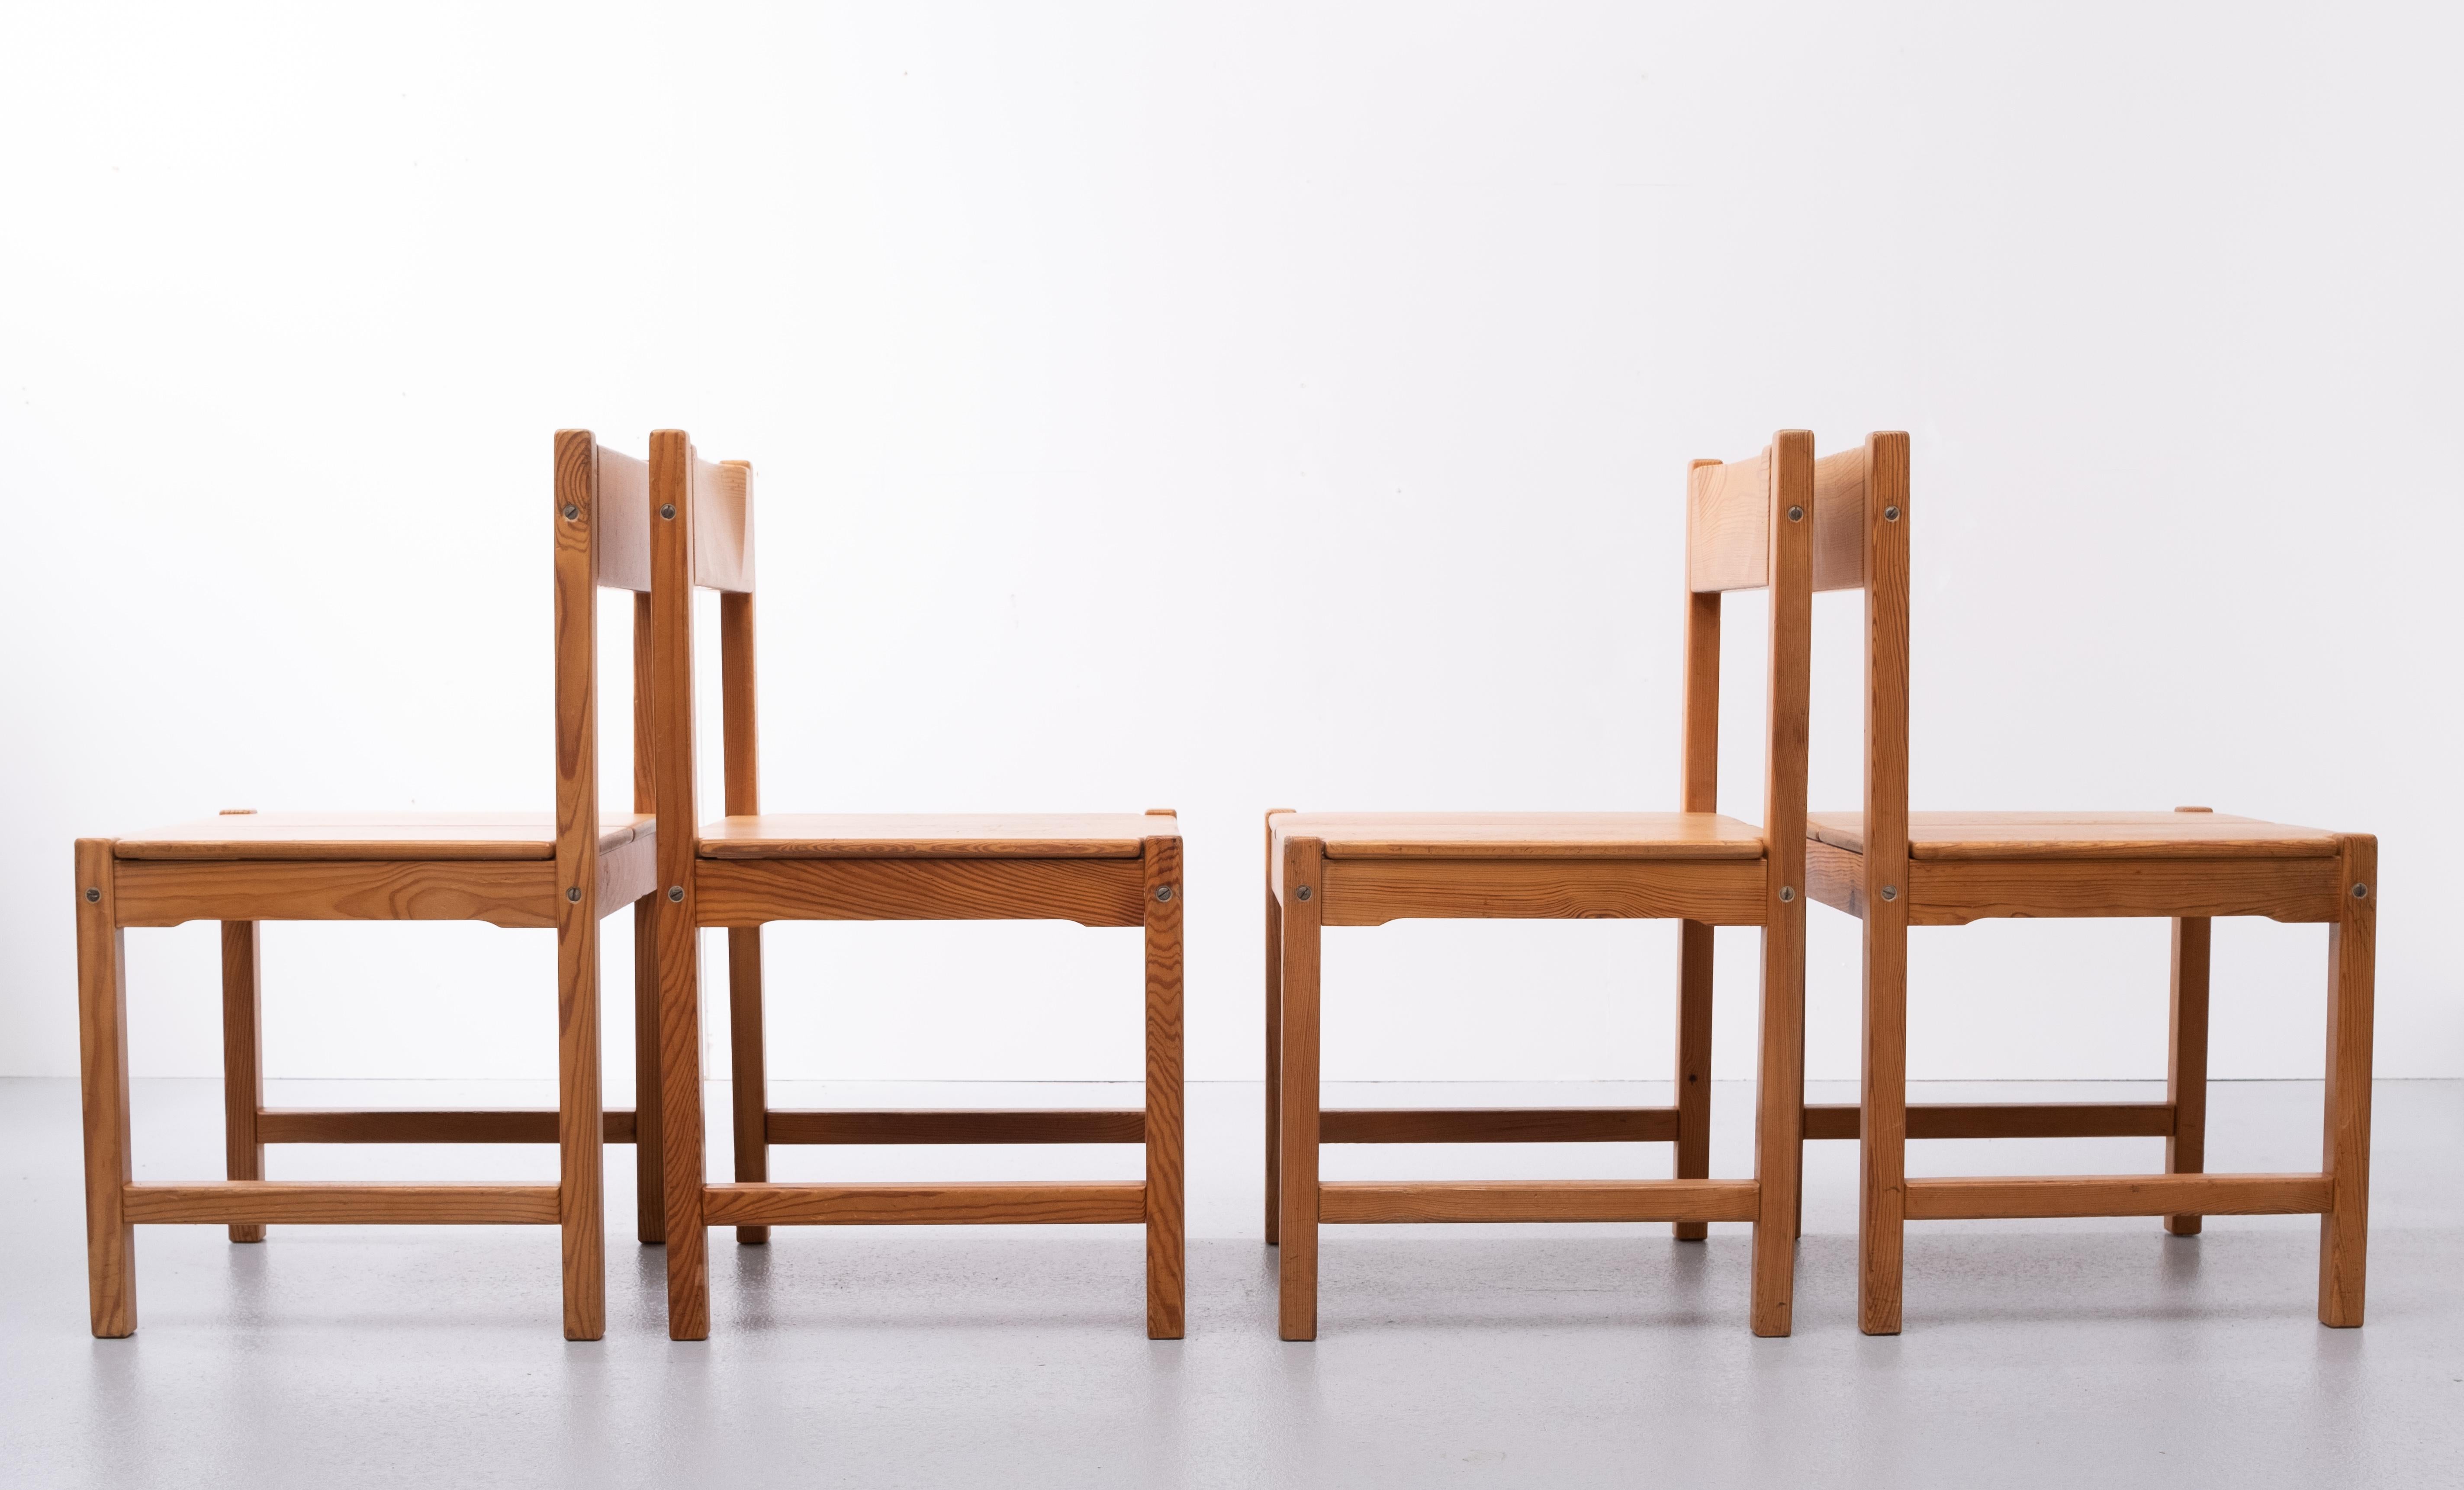 Tapio Wirkkala Pine Dining Chairs, 1960s For Sale 7